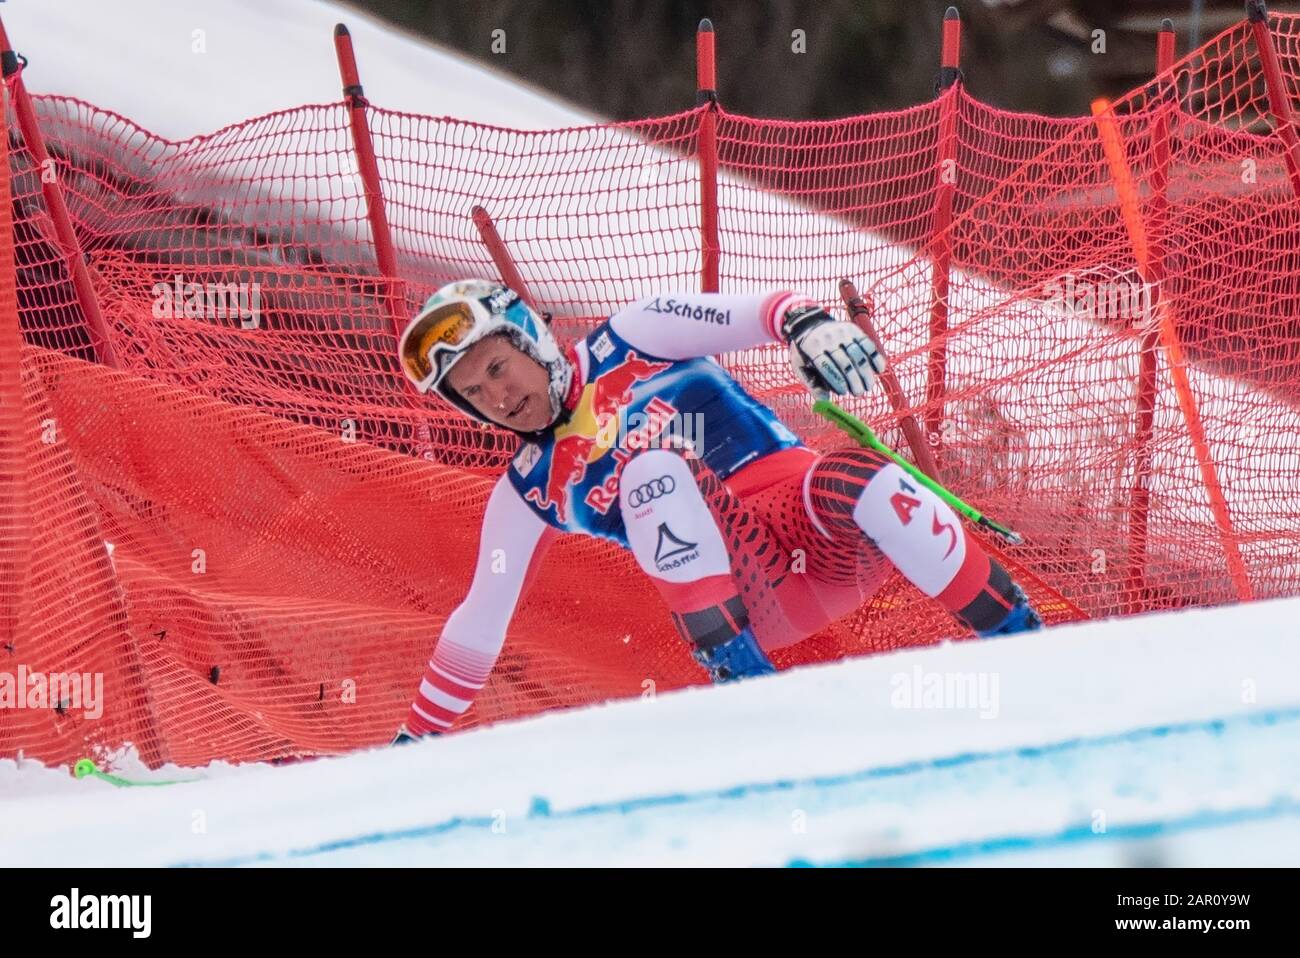 Otmar Striedinger of Austria in the fences at the Ski Alpin: 80. Hahnenkamm Race 2020 - Audi FIS Alpine Ski World Cup - Men's Downhill at the Streif on January 25, 2020 in Kitzbuehel, AUSTRIA. Credit: European Sports Photographic Agency/Alamy Live News Stock Photo